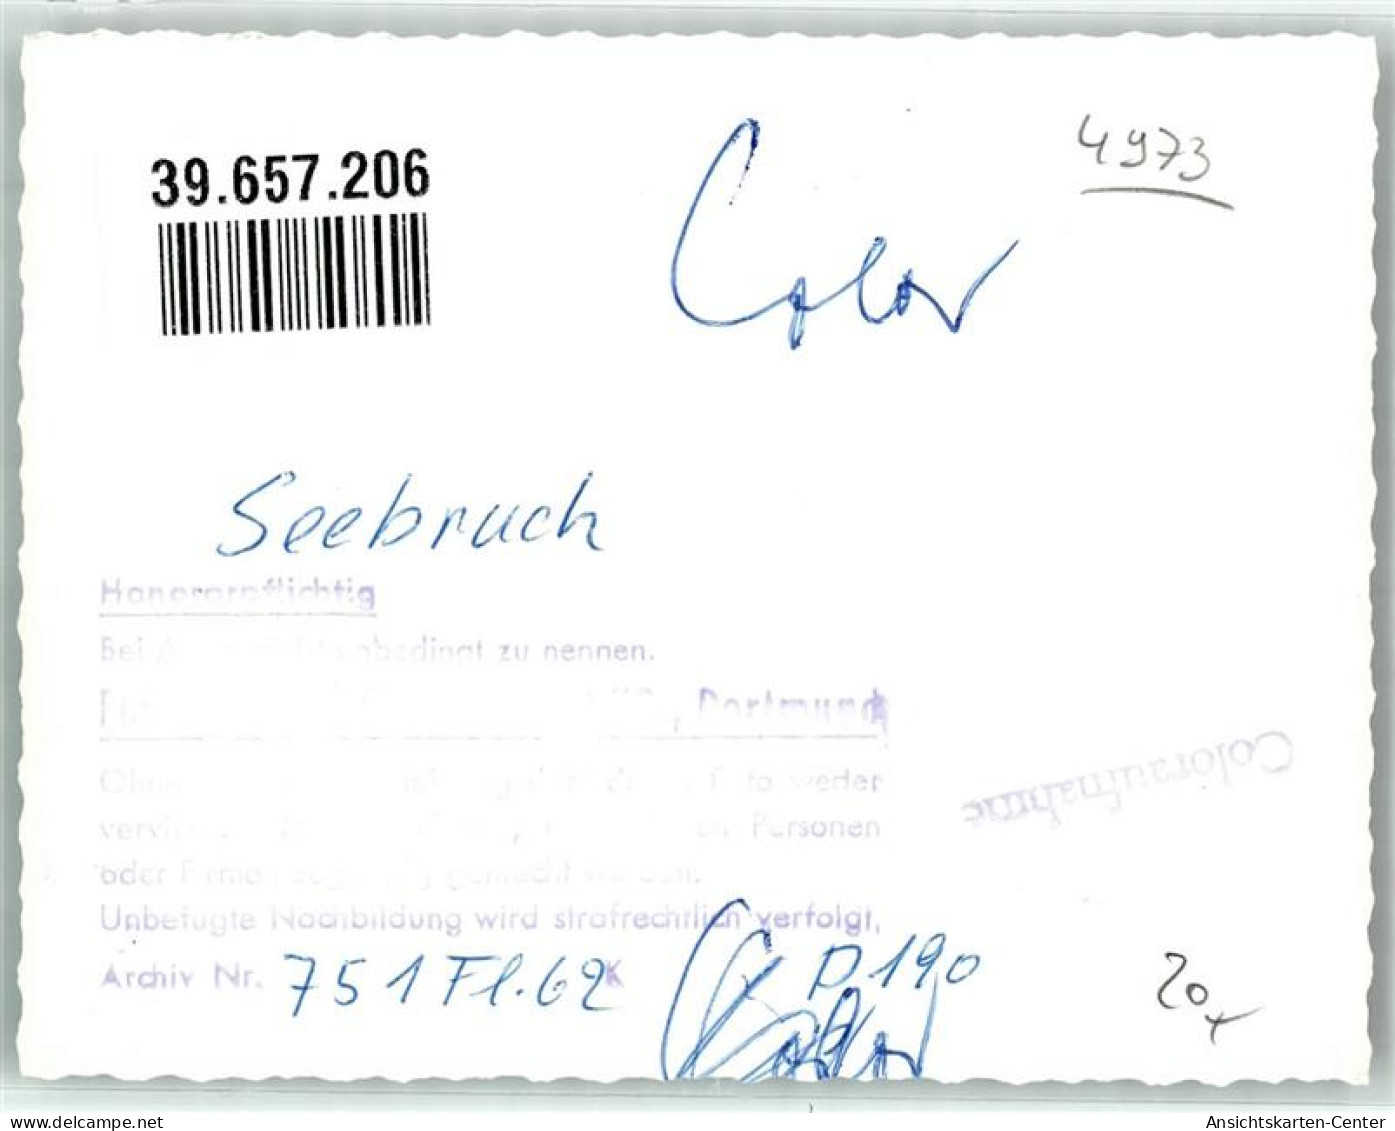 39657206 - Bad Seebruch - Vlotho